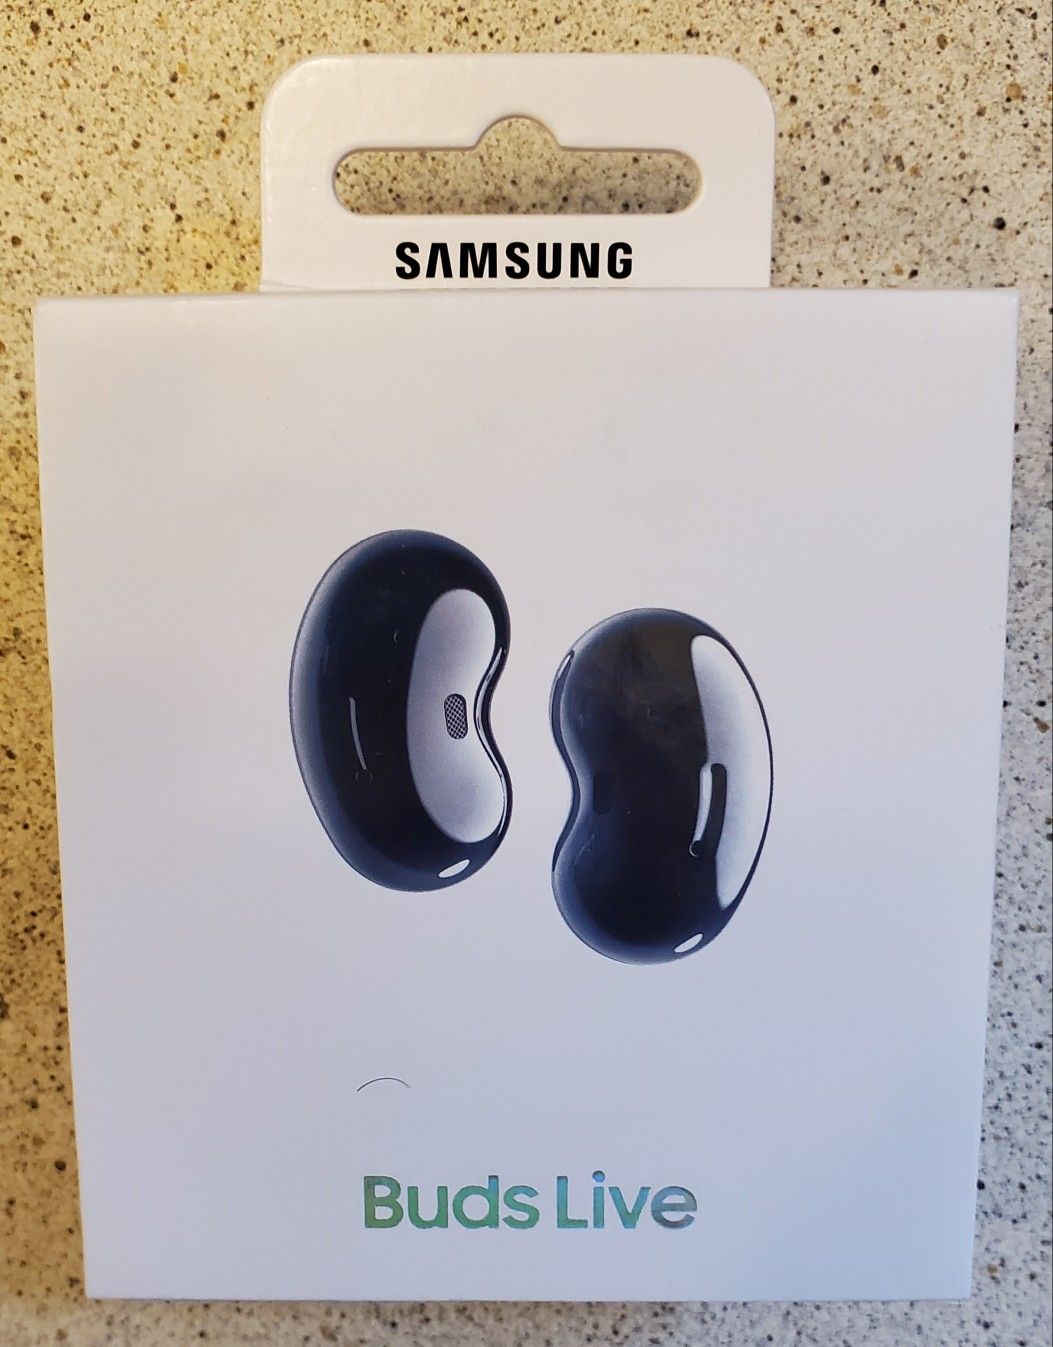 Brand New Samsung Galaxy Buds Live Bluetooth headset - Black + Never Open headphone